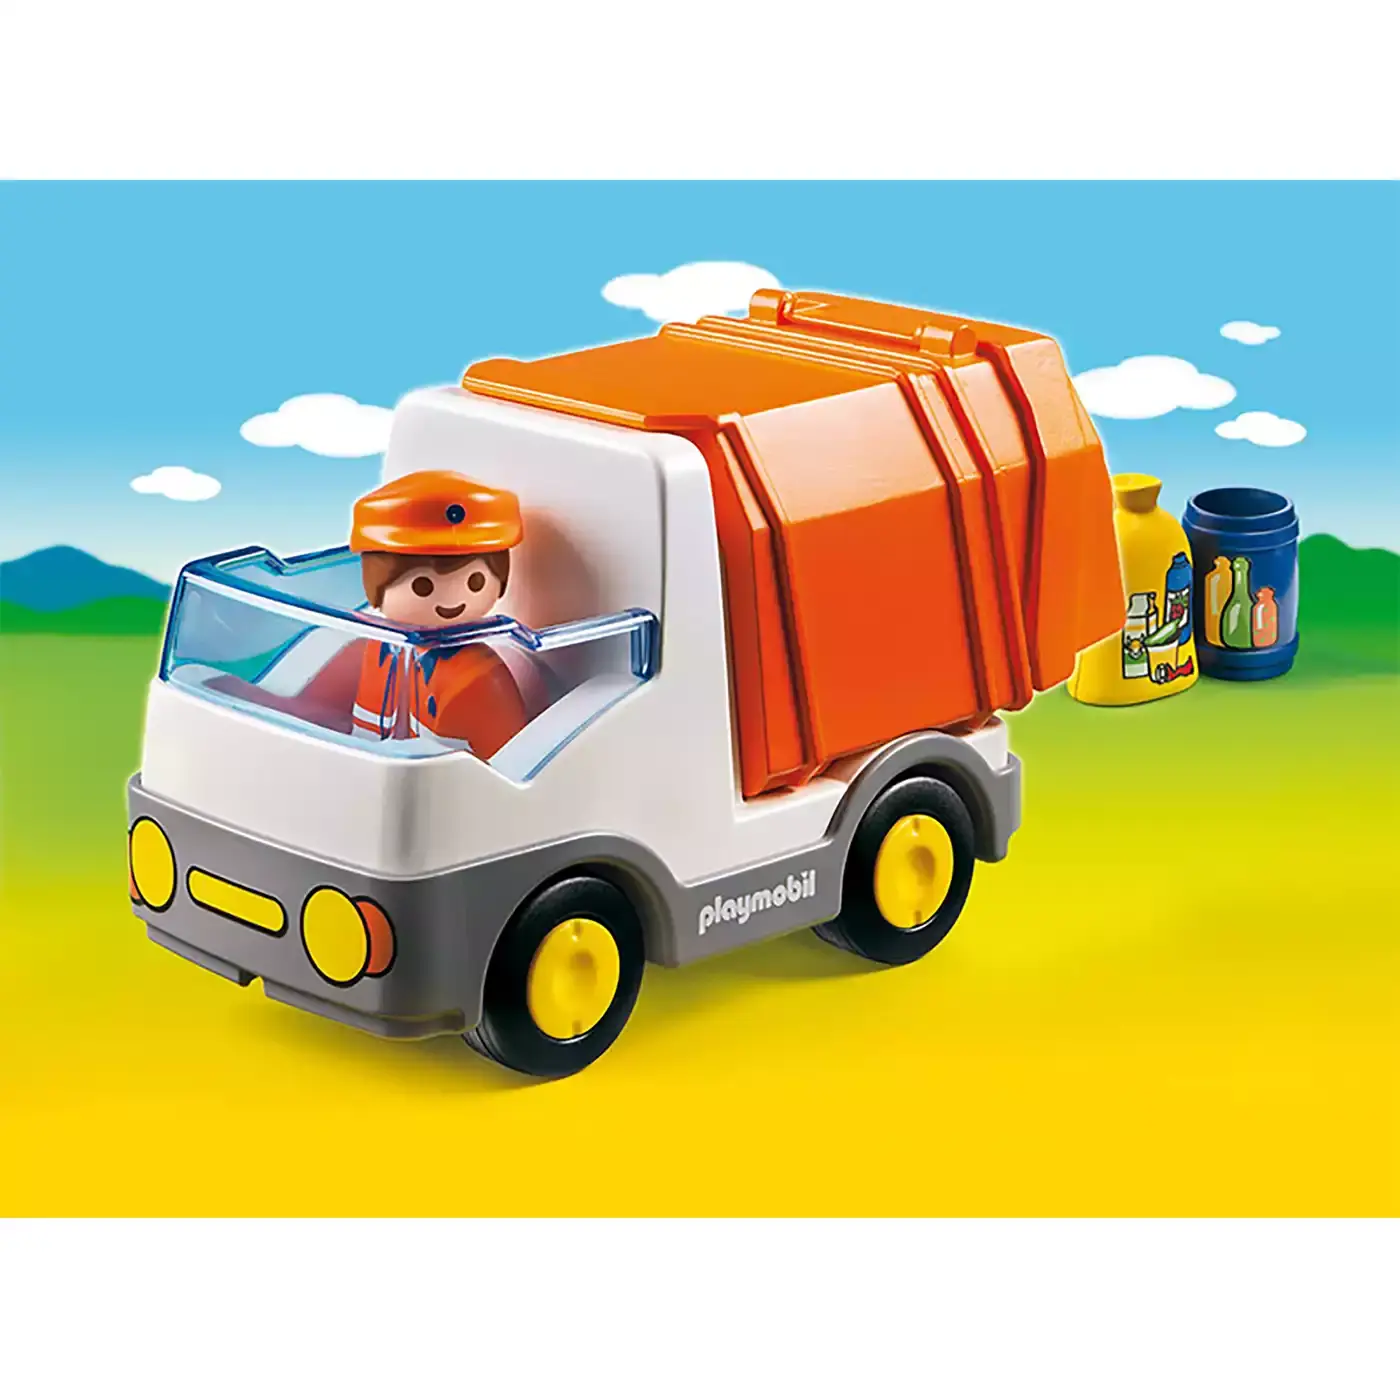 Müllauto 6774 playmobil Orange 2000559025200 1